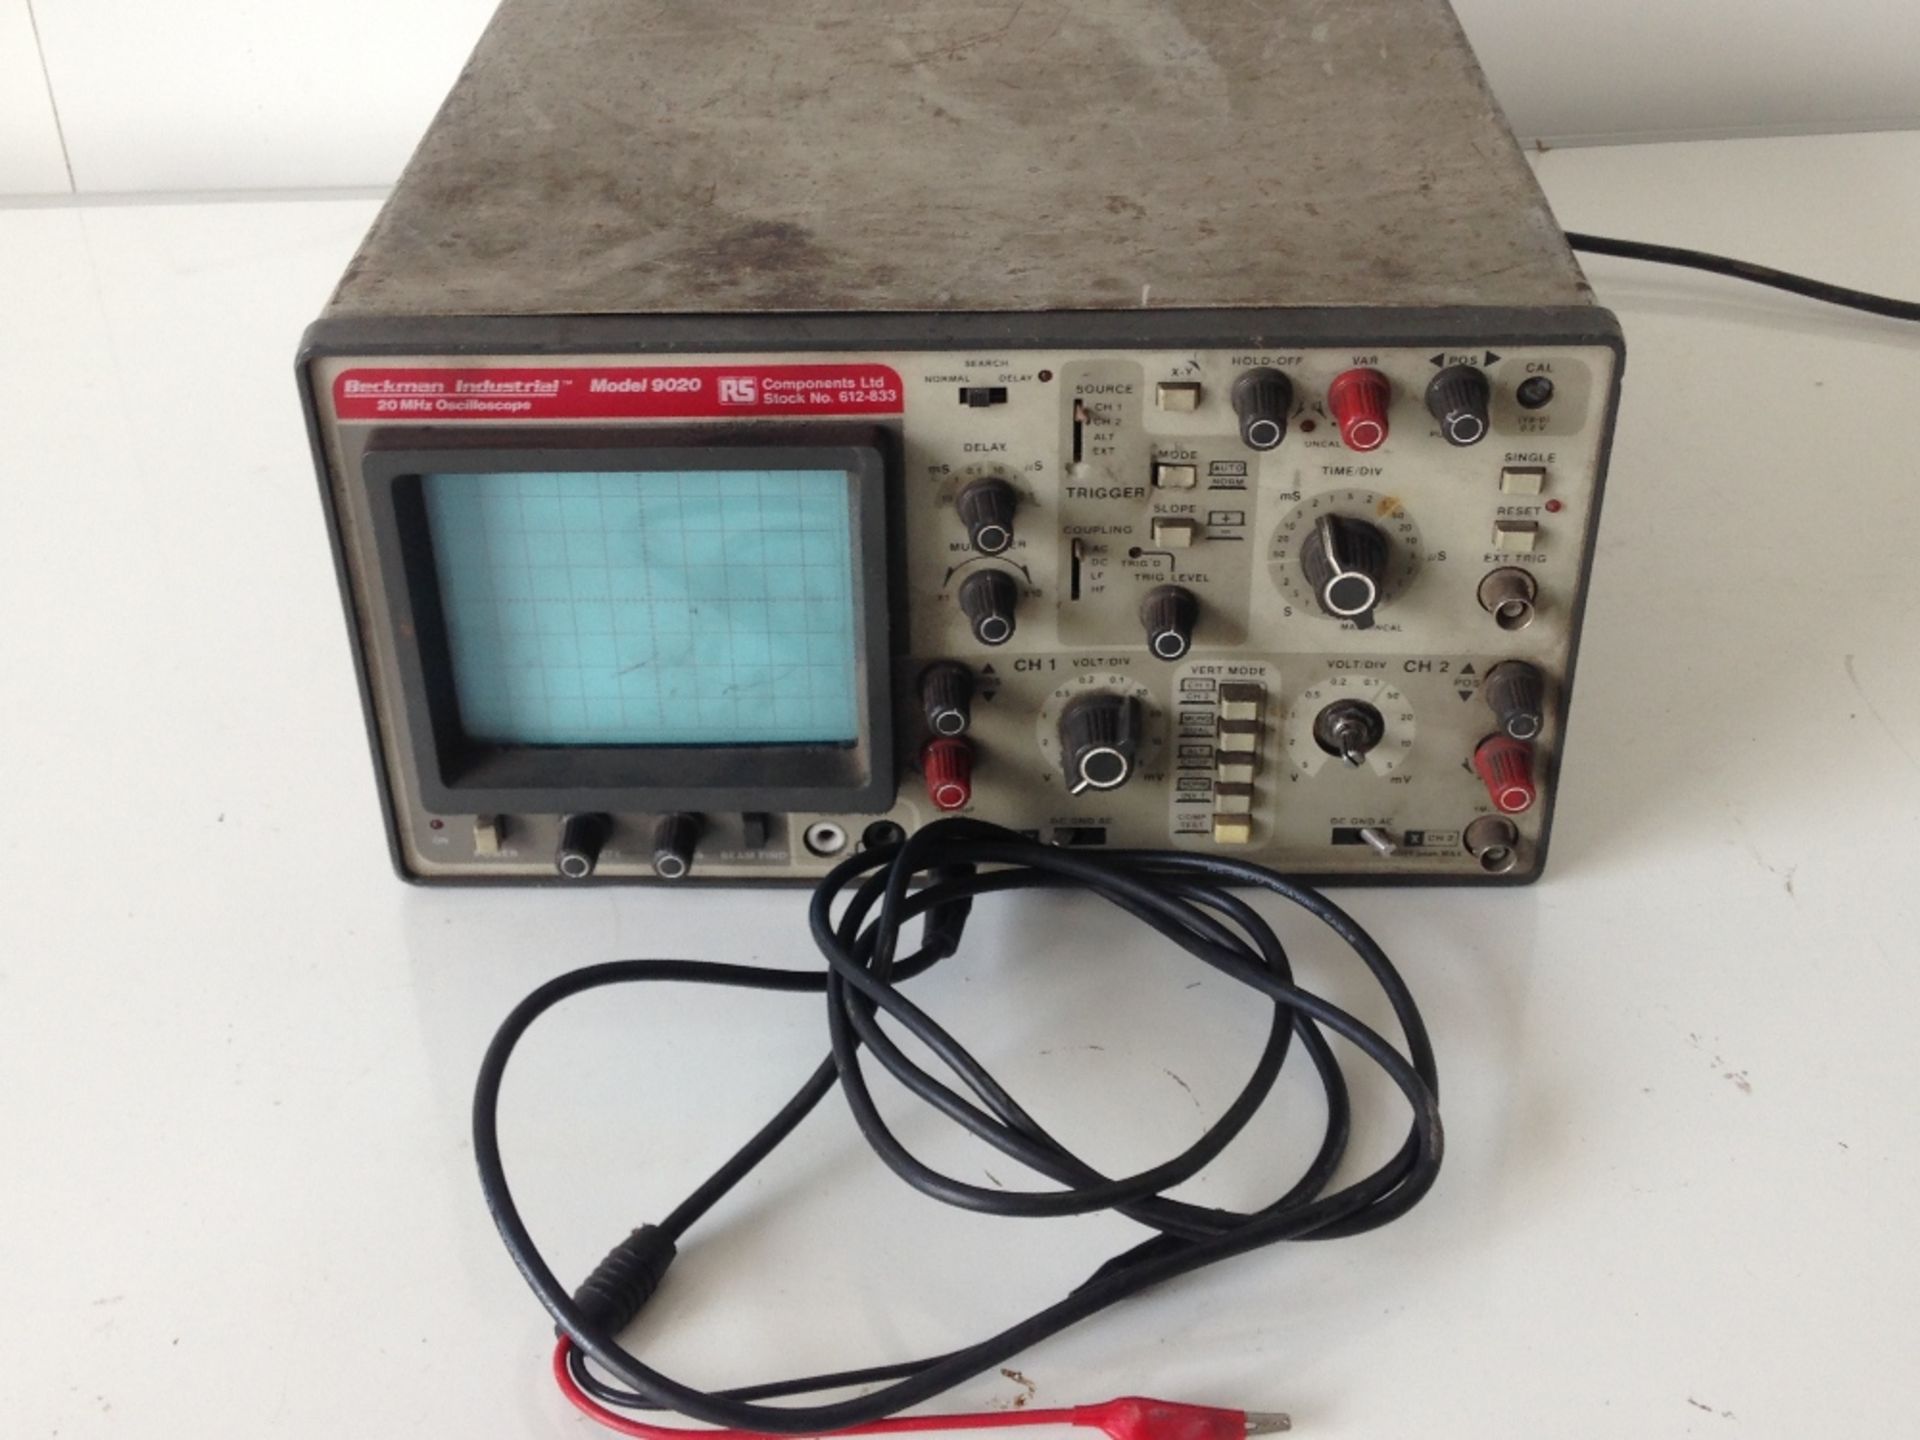 Beckman Industrial 20 HZ oscilloscope Model 9020